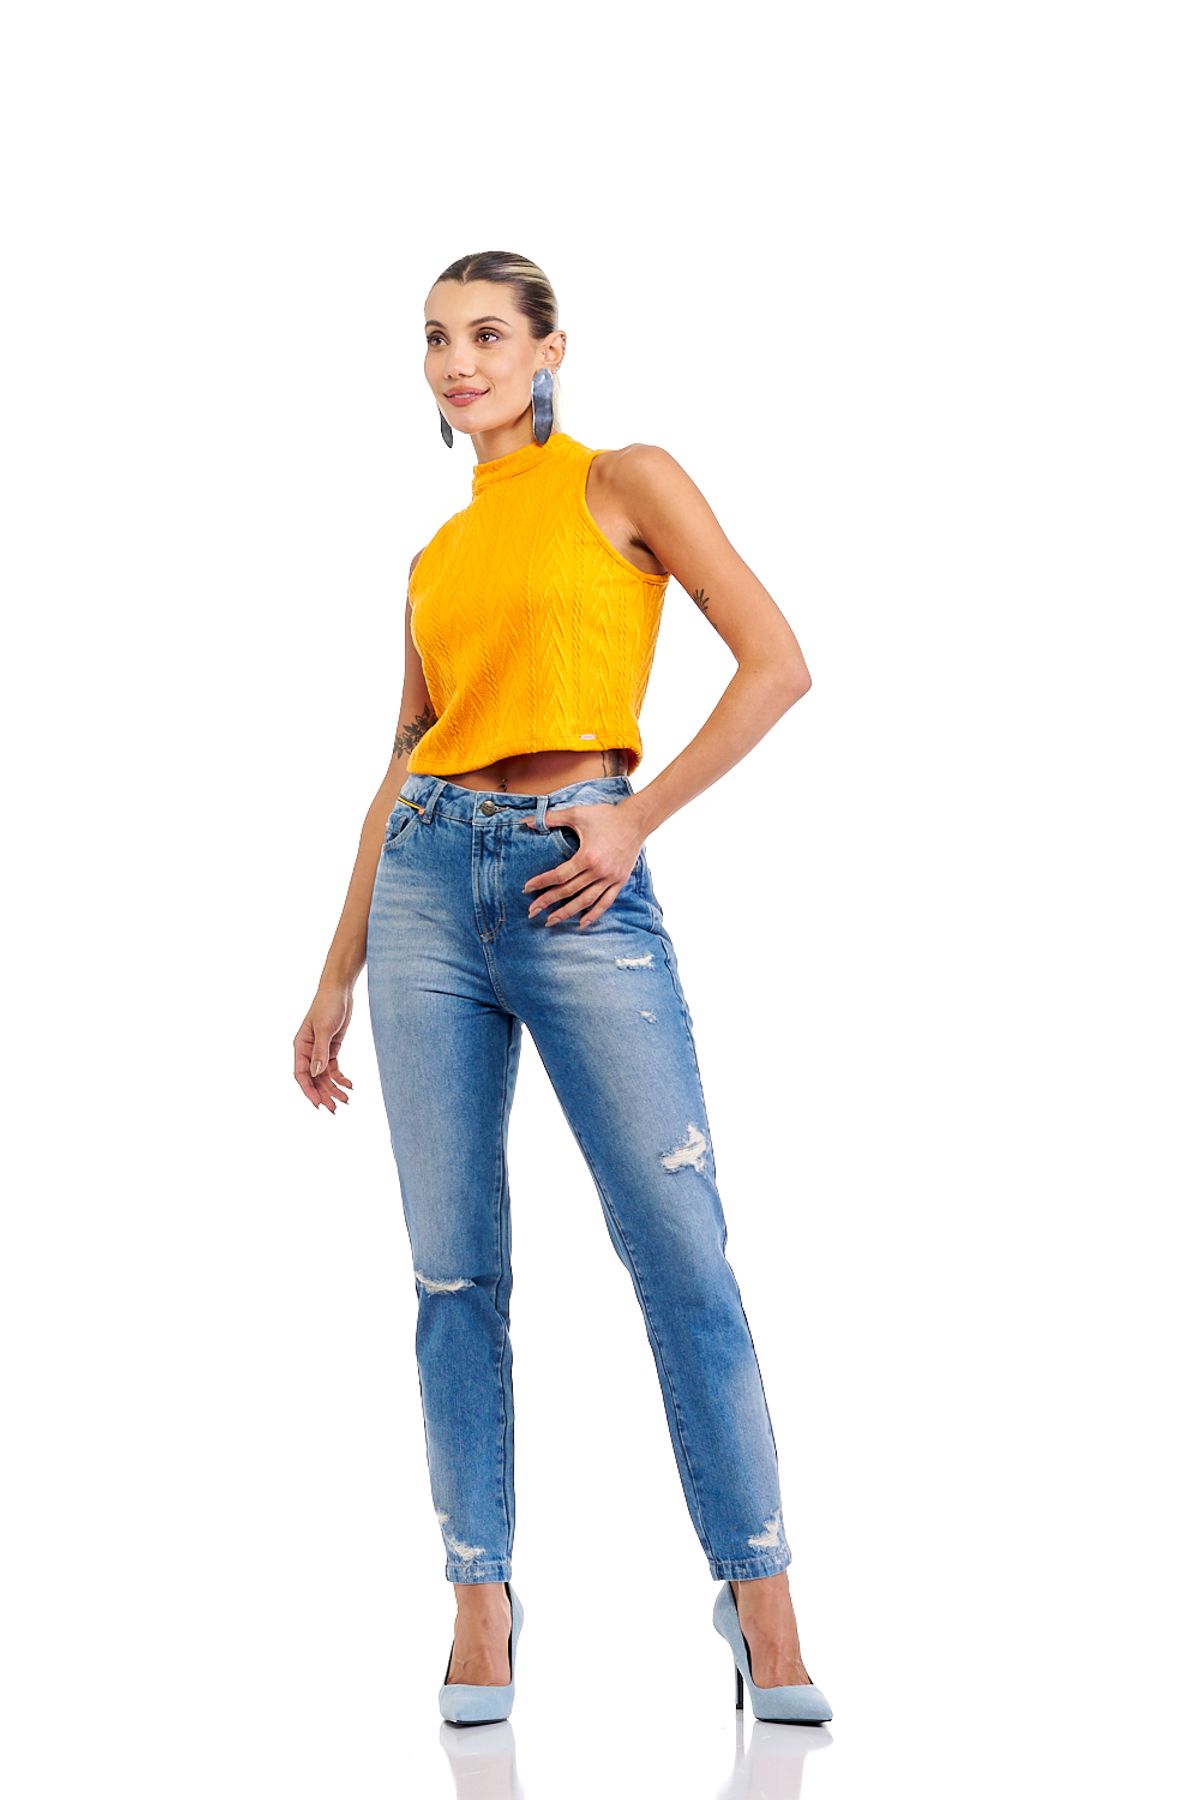 Melody jeans para meninas jeans jeggings 4 cores mulher magro pantalones  vaqueros mujer feminino jean